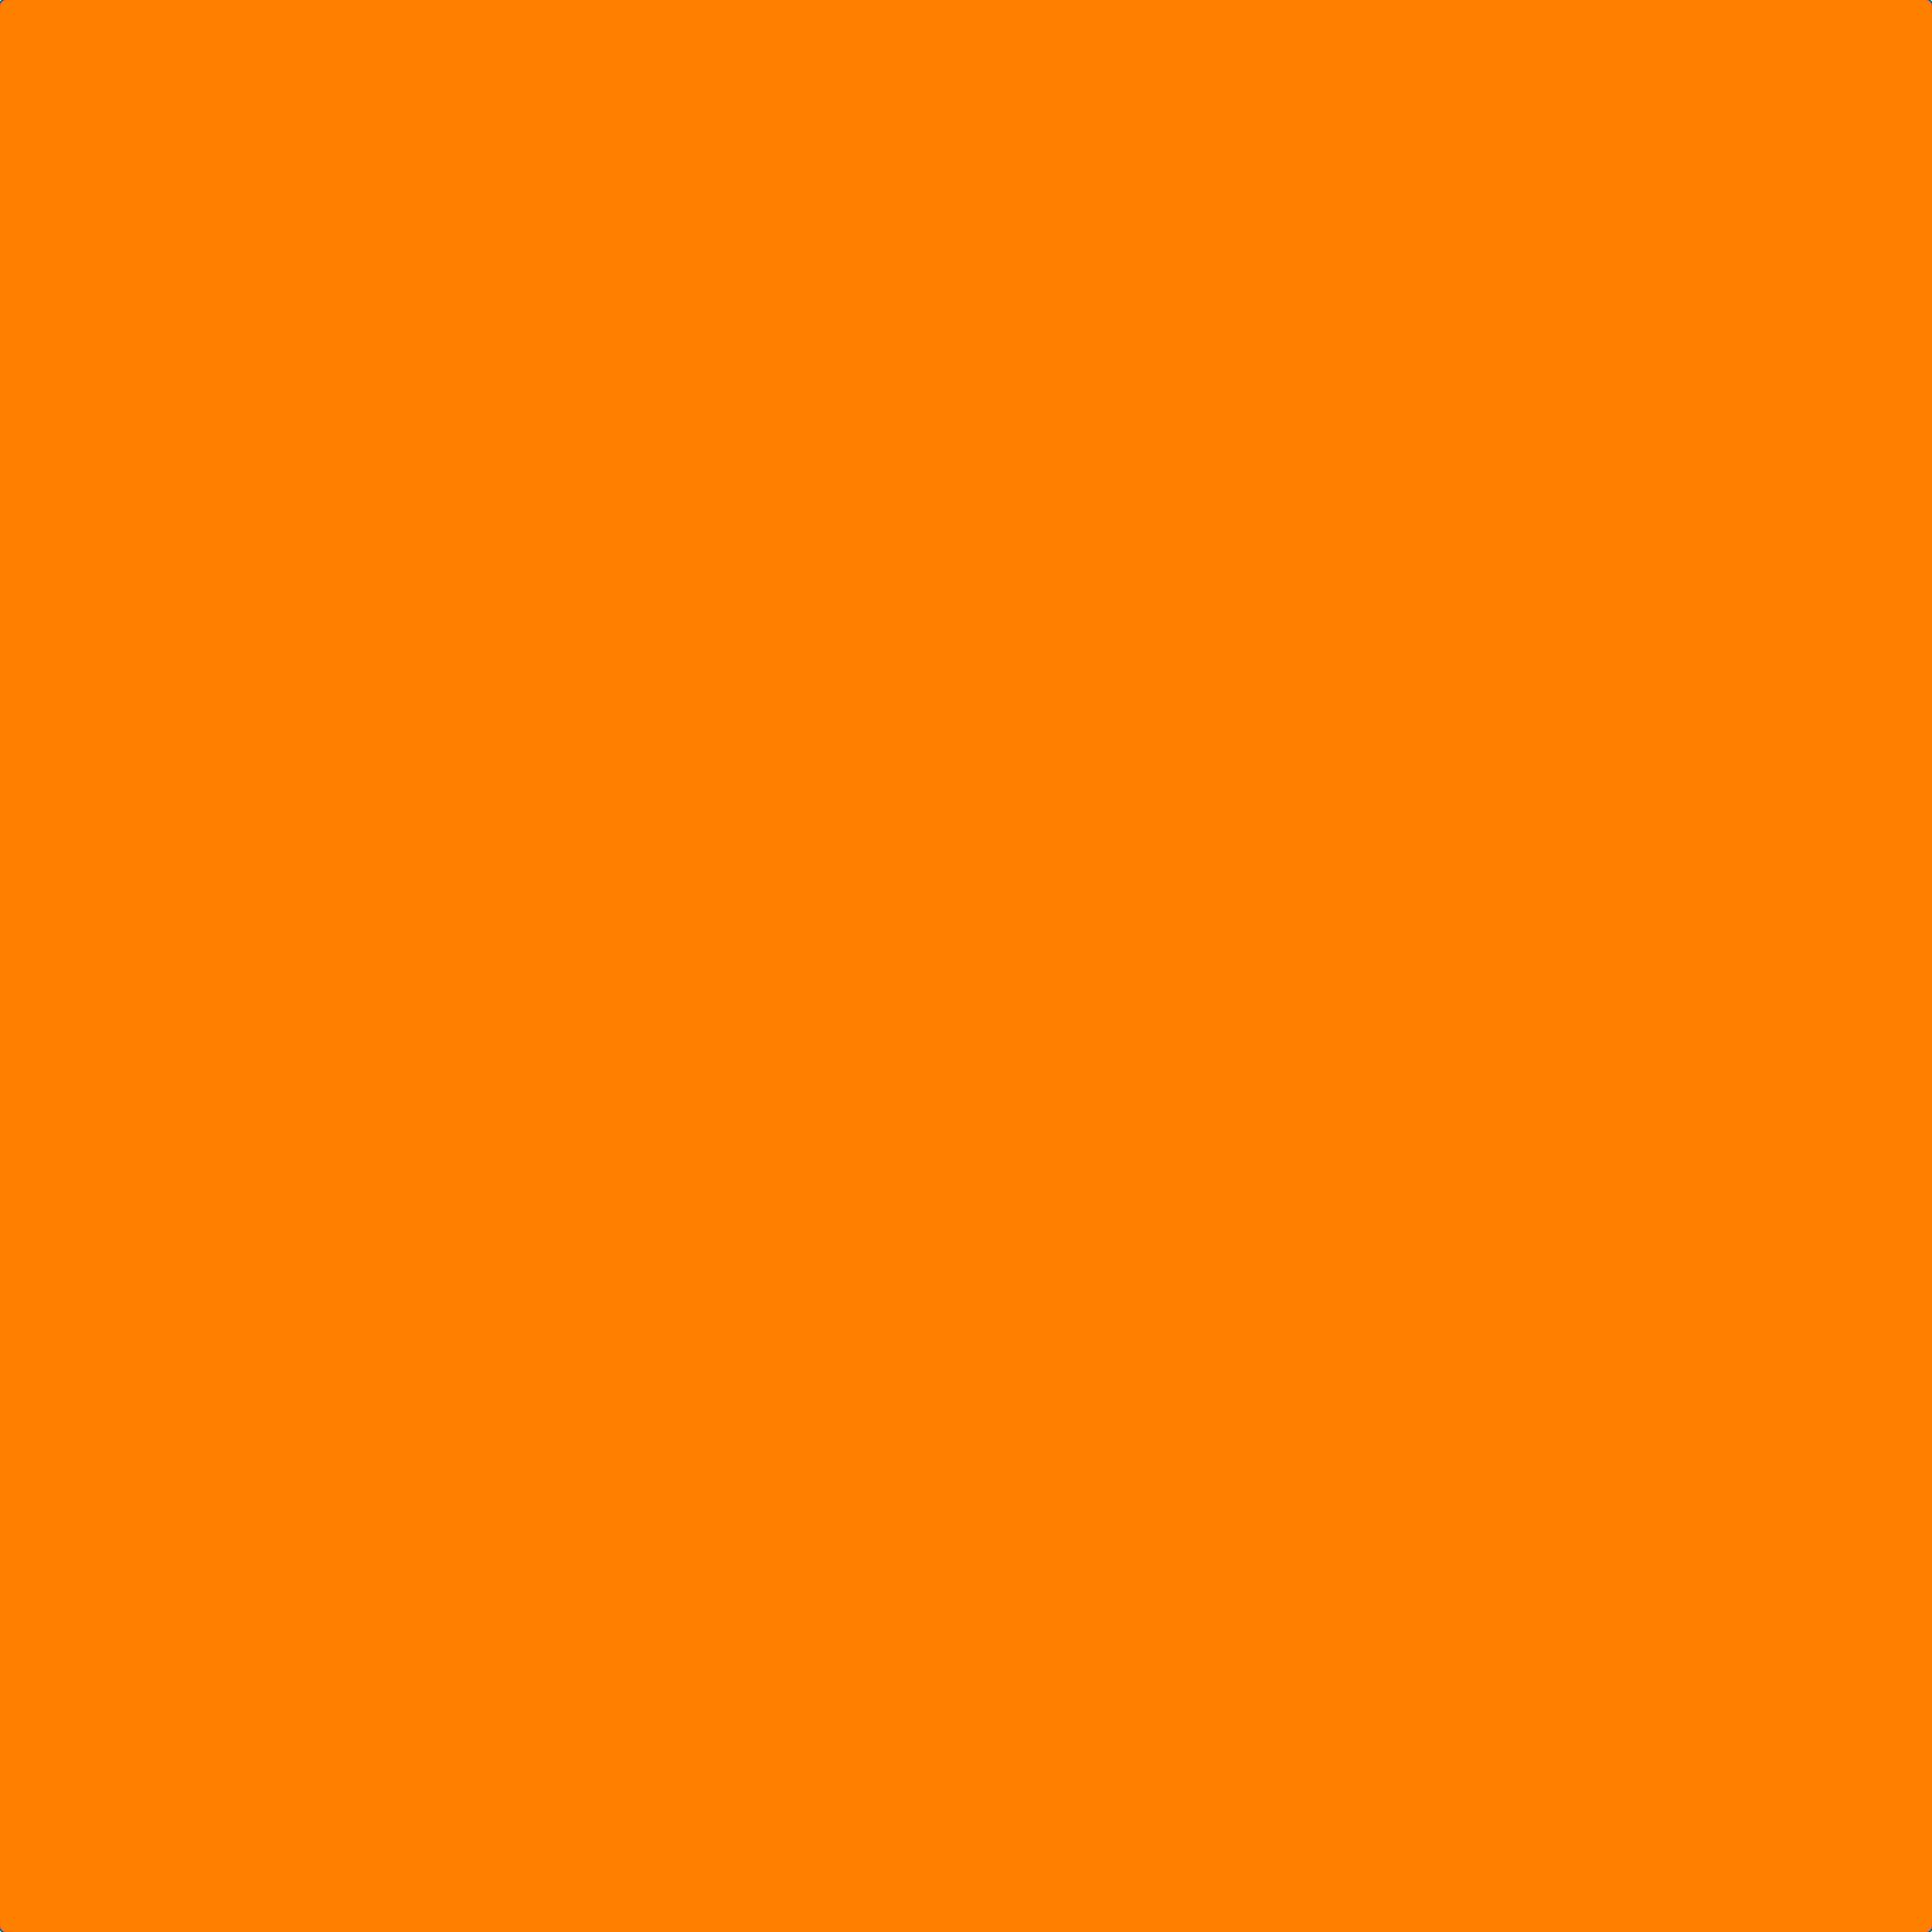 Wallpaper For > Solid Neon Orange Background